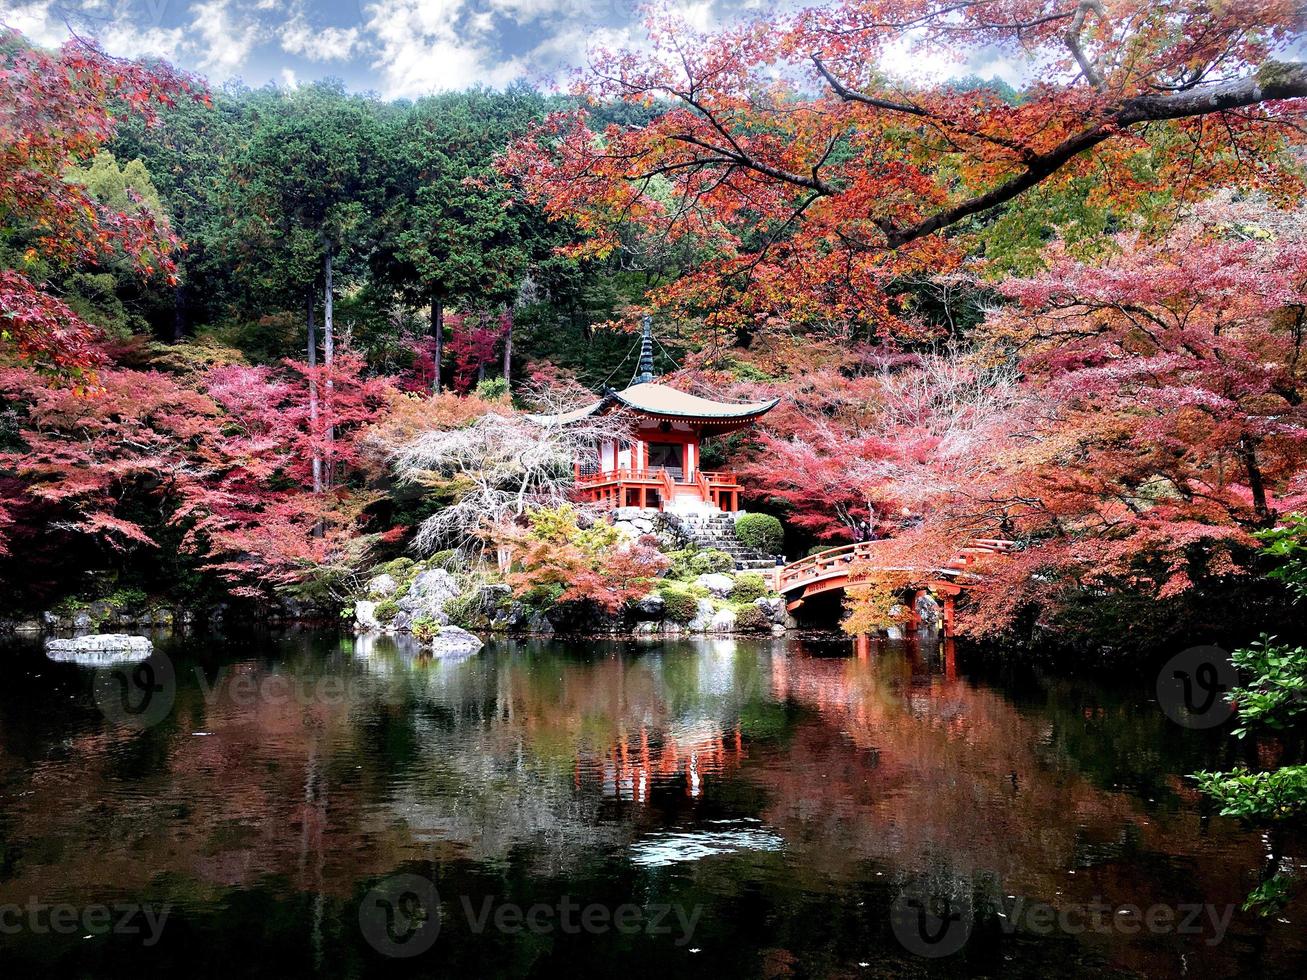 Daigo-ji temple with colorful maple trees in autumn, Kyoto, Japan photo